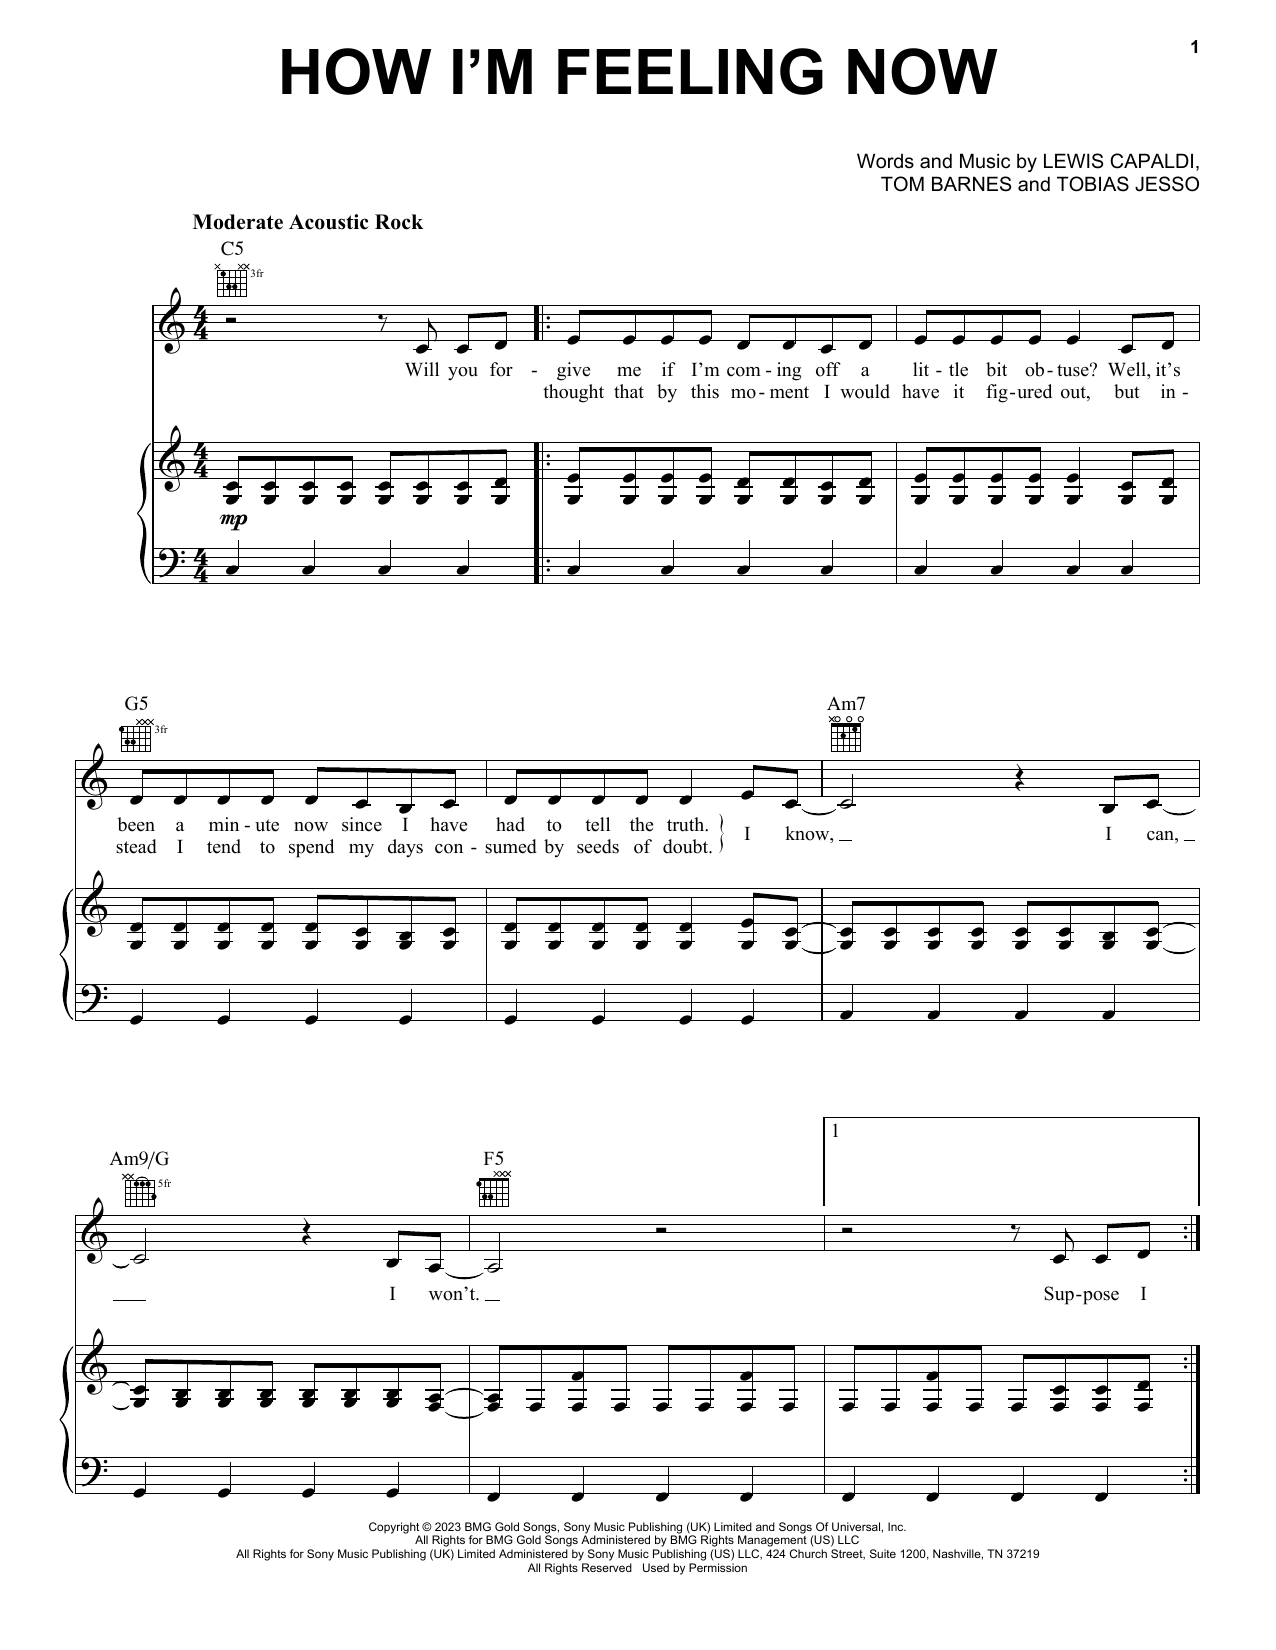 Lewis Capaldi How I'm Feeling Now sheet music notes printable PDF score